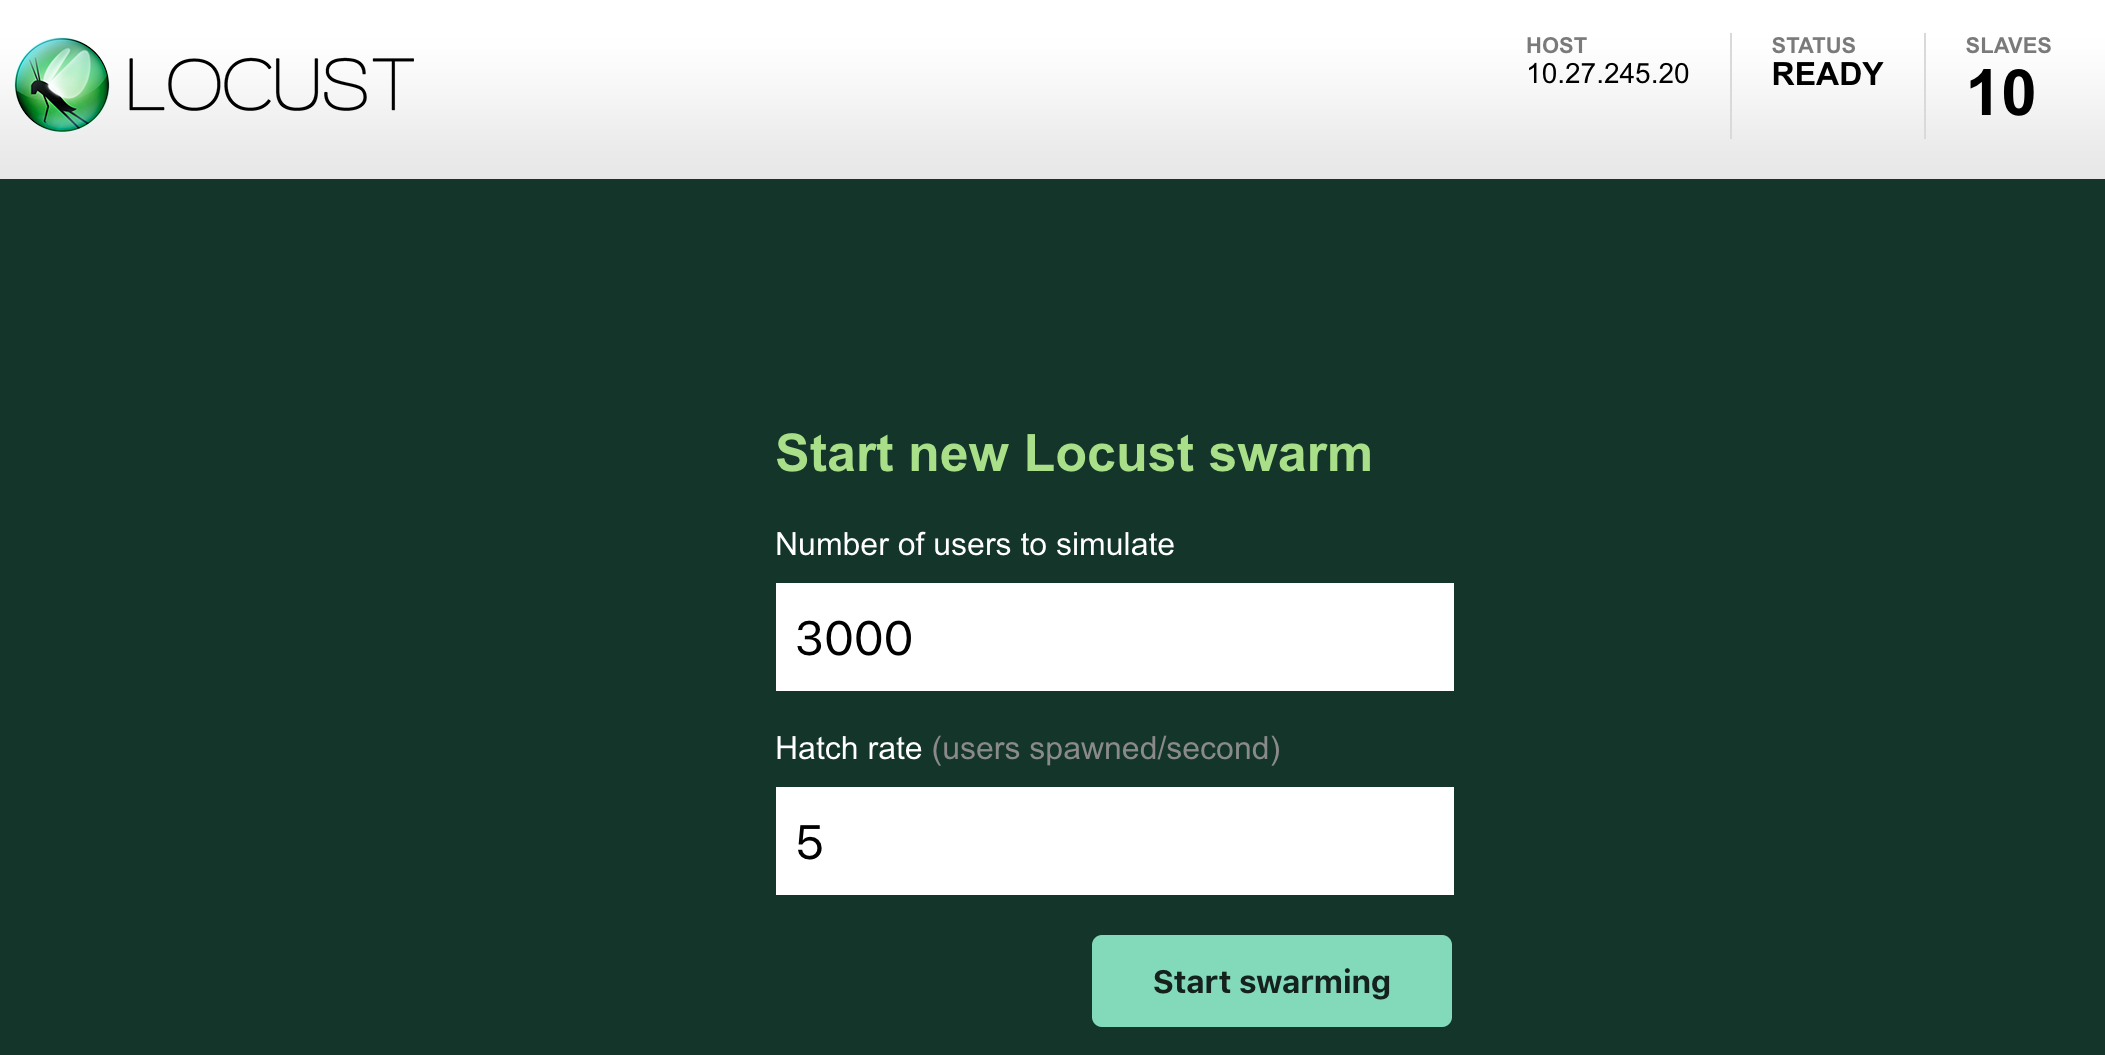 Starting a new Locust swarm.